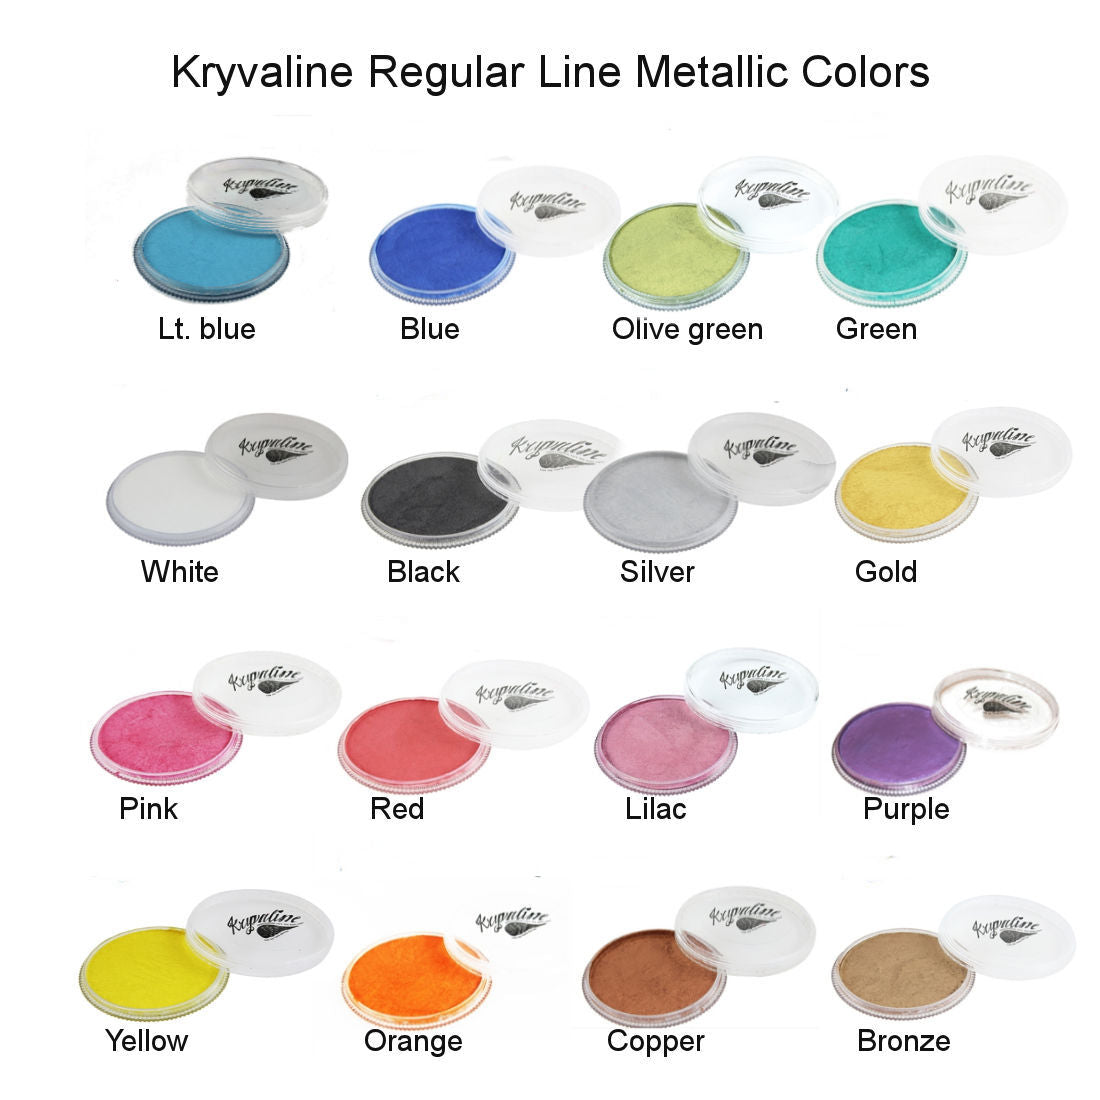 Kryvaline Face and body Paint Metallic Colors 30g Purple - Kryvaline Body Art Makeup | Glitter Tattoos, Face & Body Paint, Design - Kryvaline Body Art Makeup